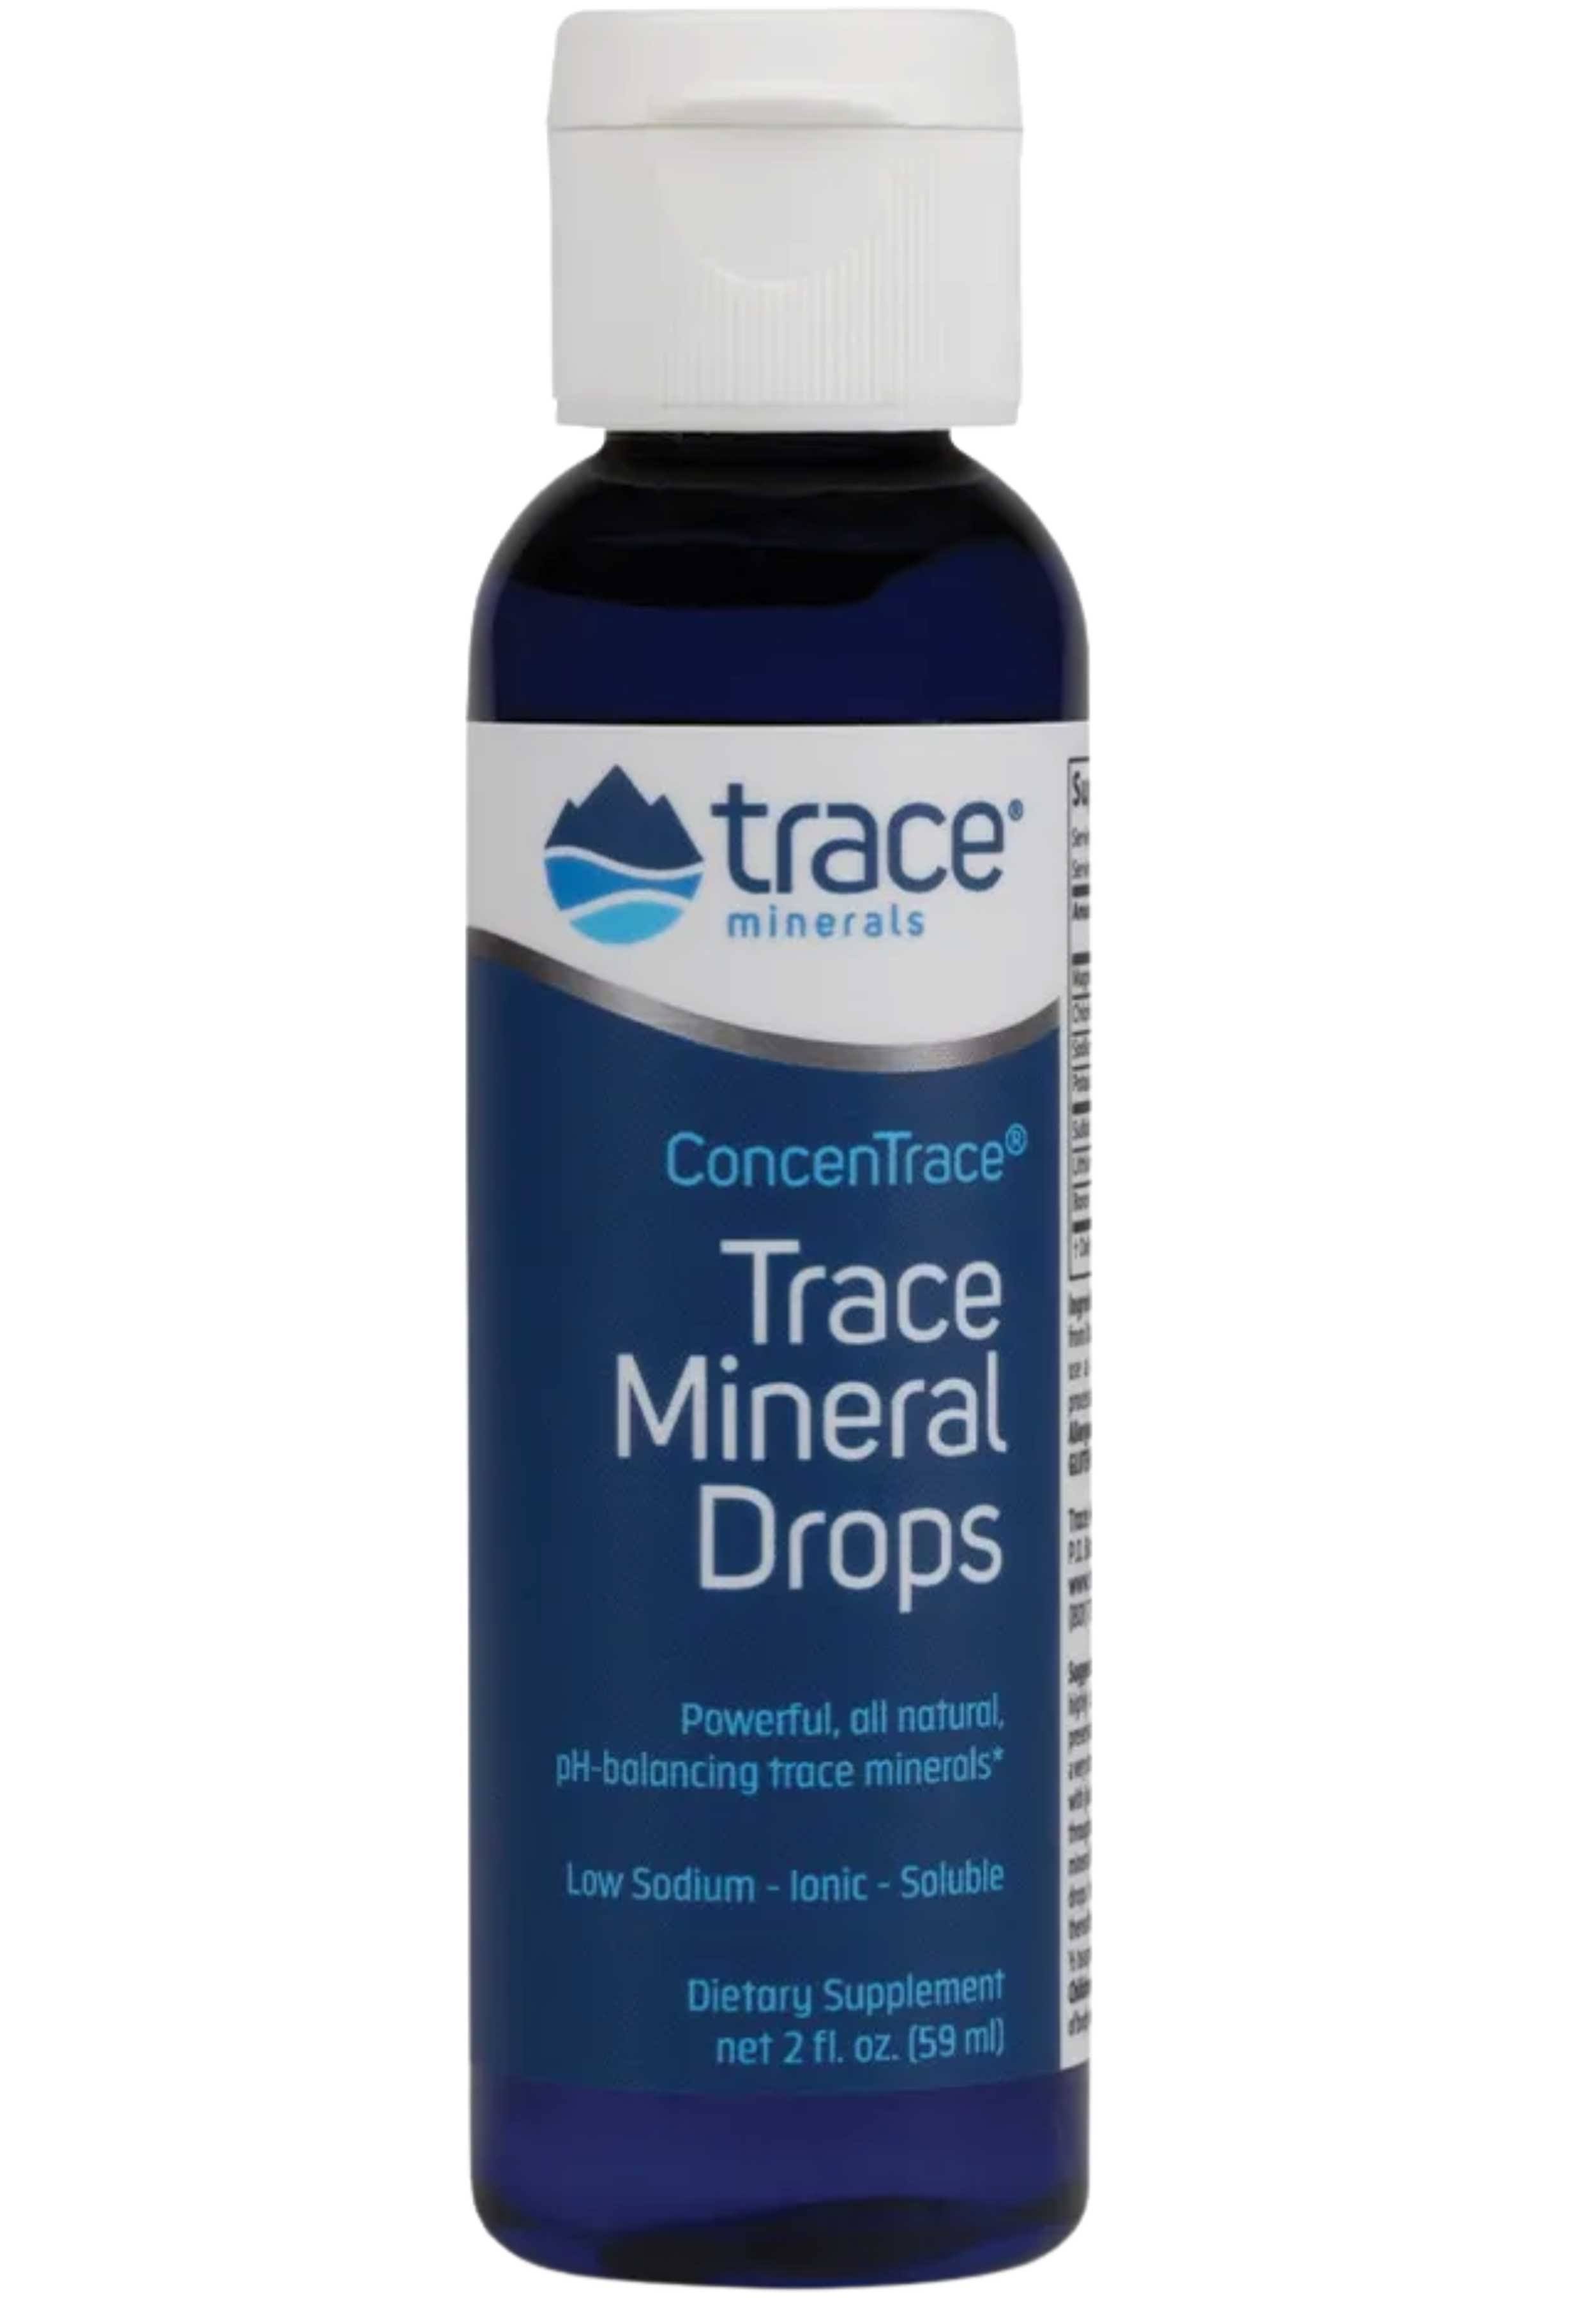 Trace Minerals Concentrace Trace Mineral Drops